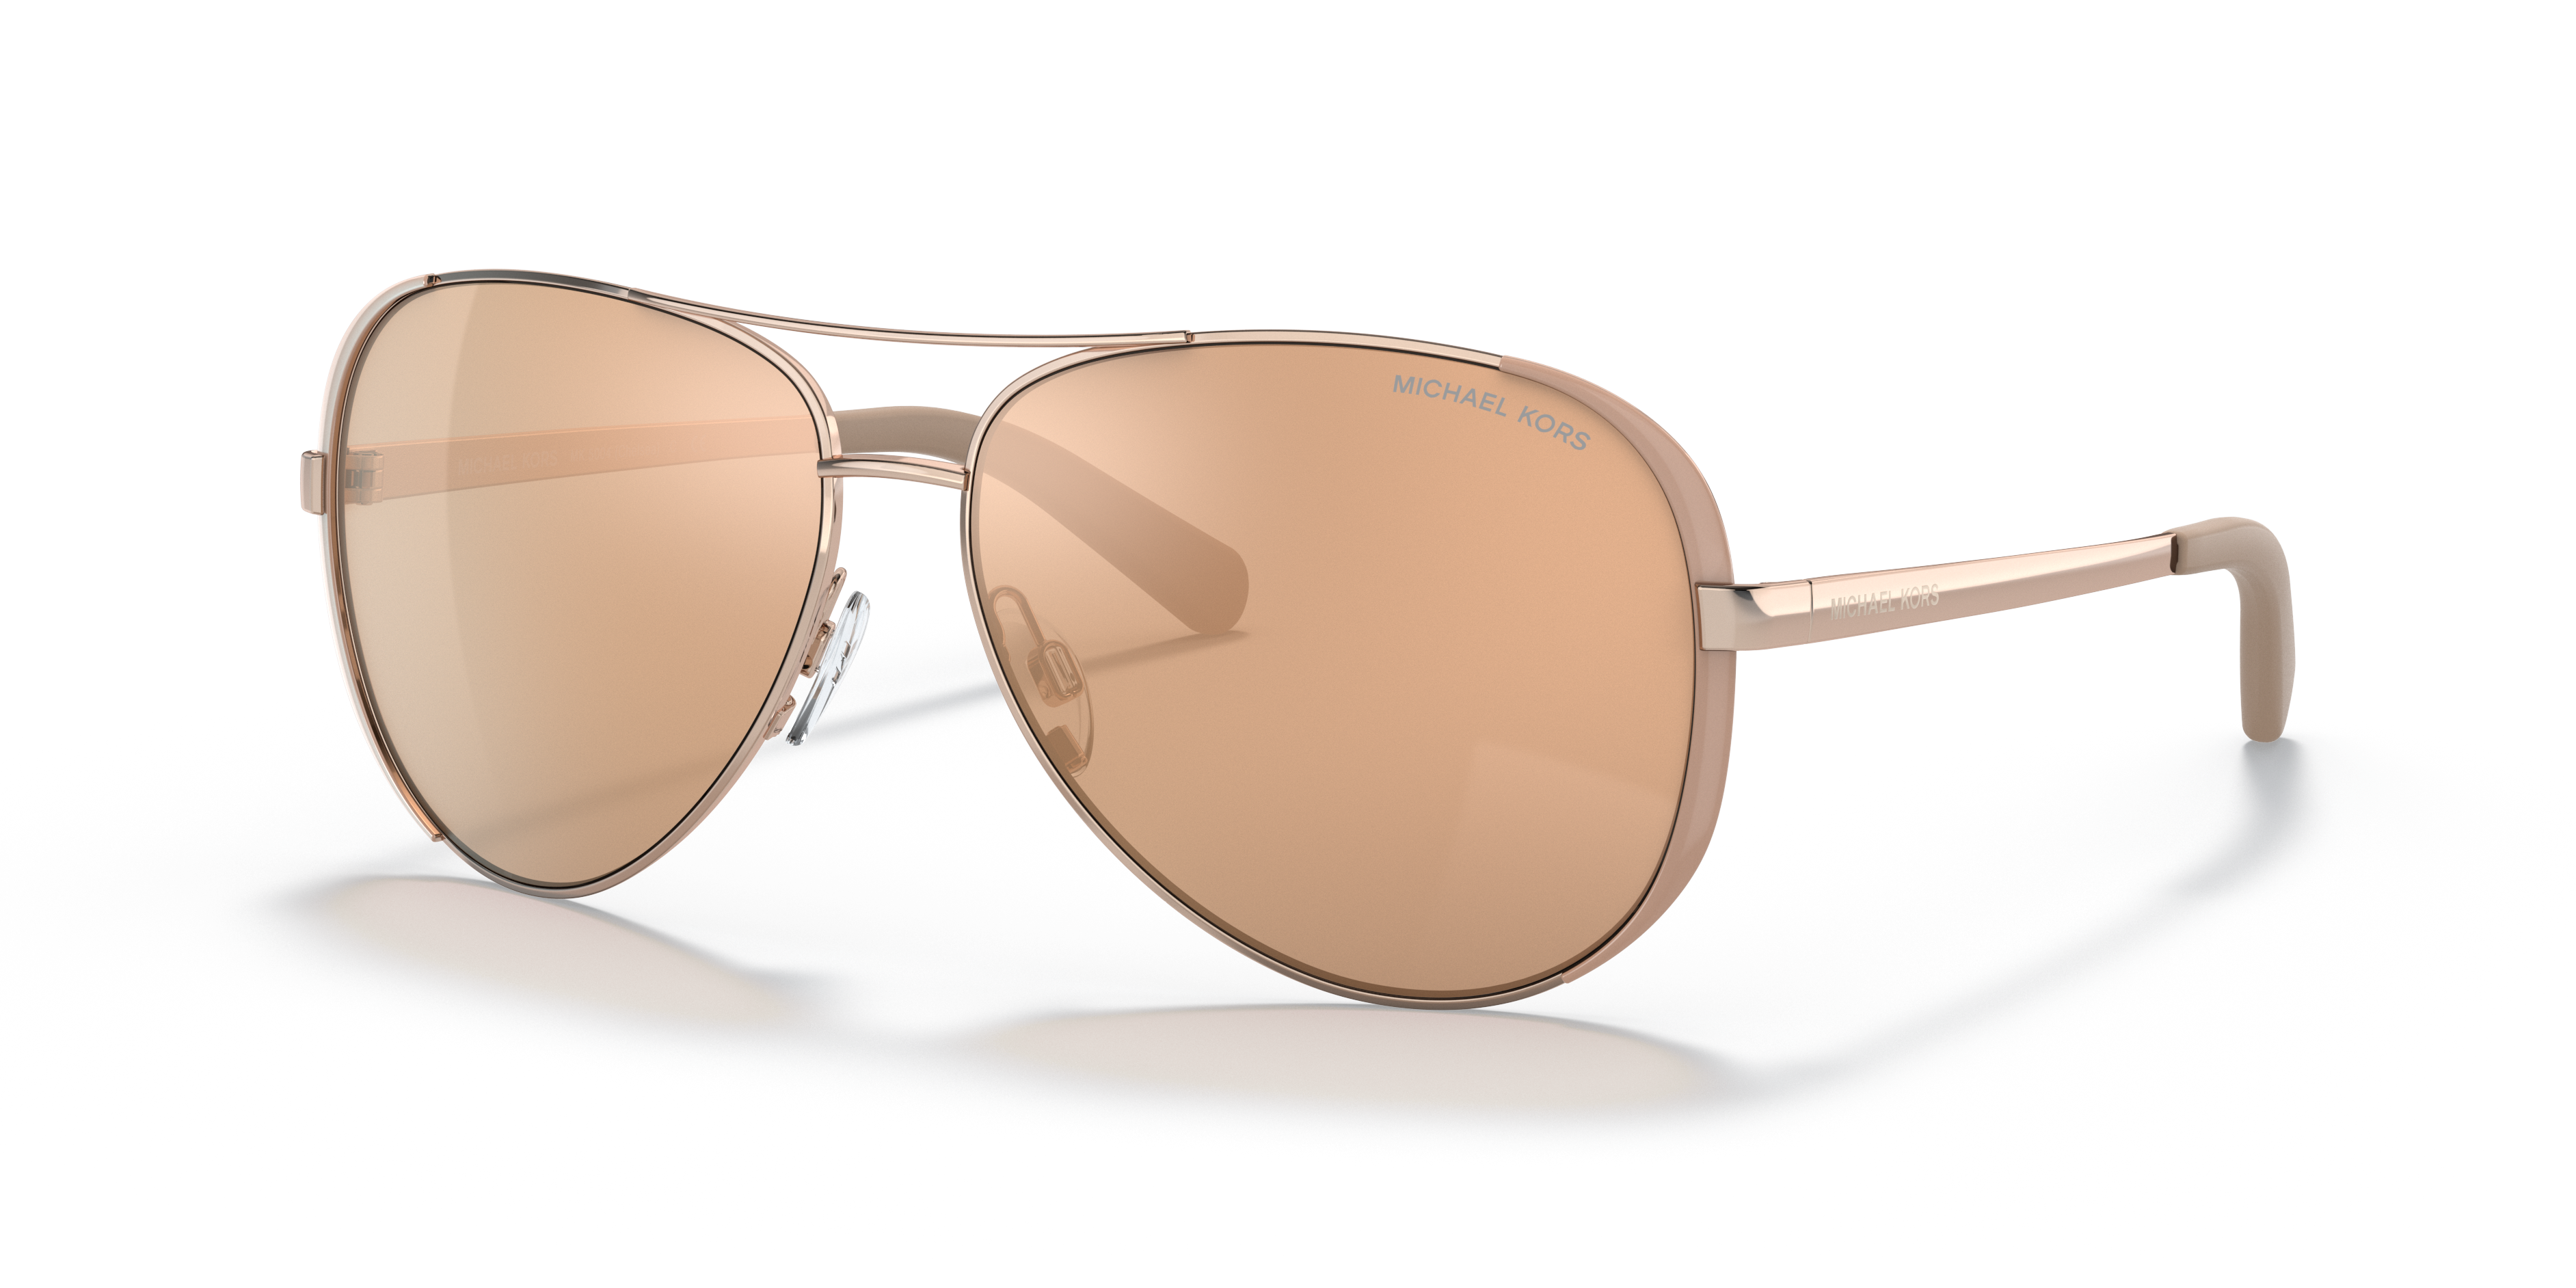 Michael Kors MK5004 Chelsea Aviator Polarized Sunglasses  Shopping From USA